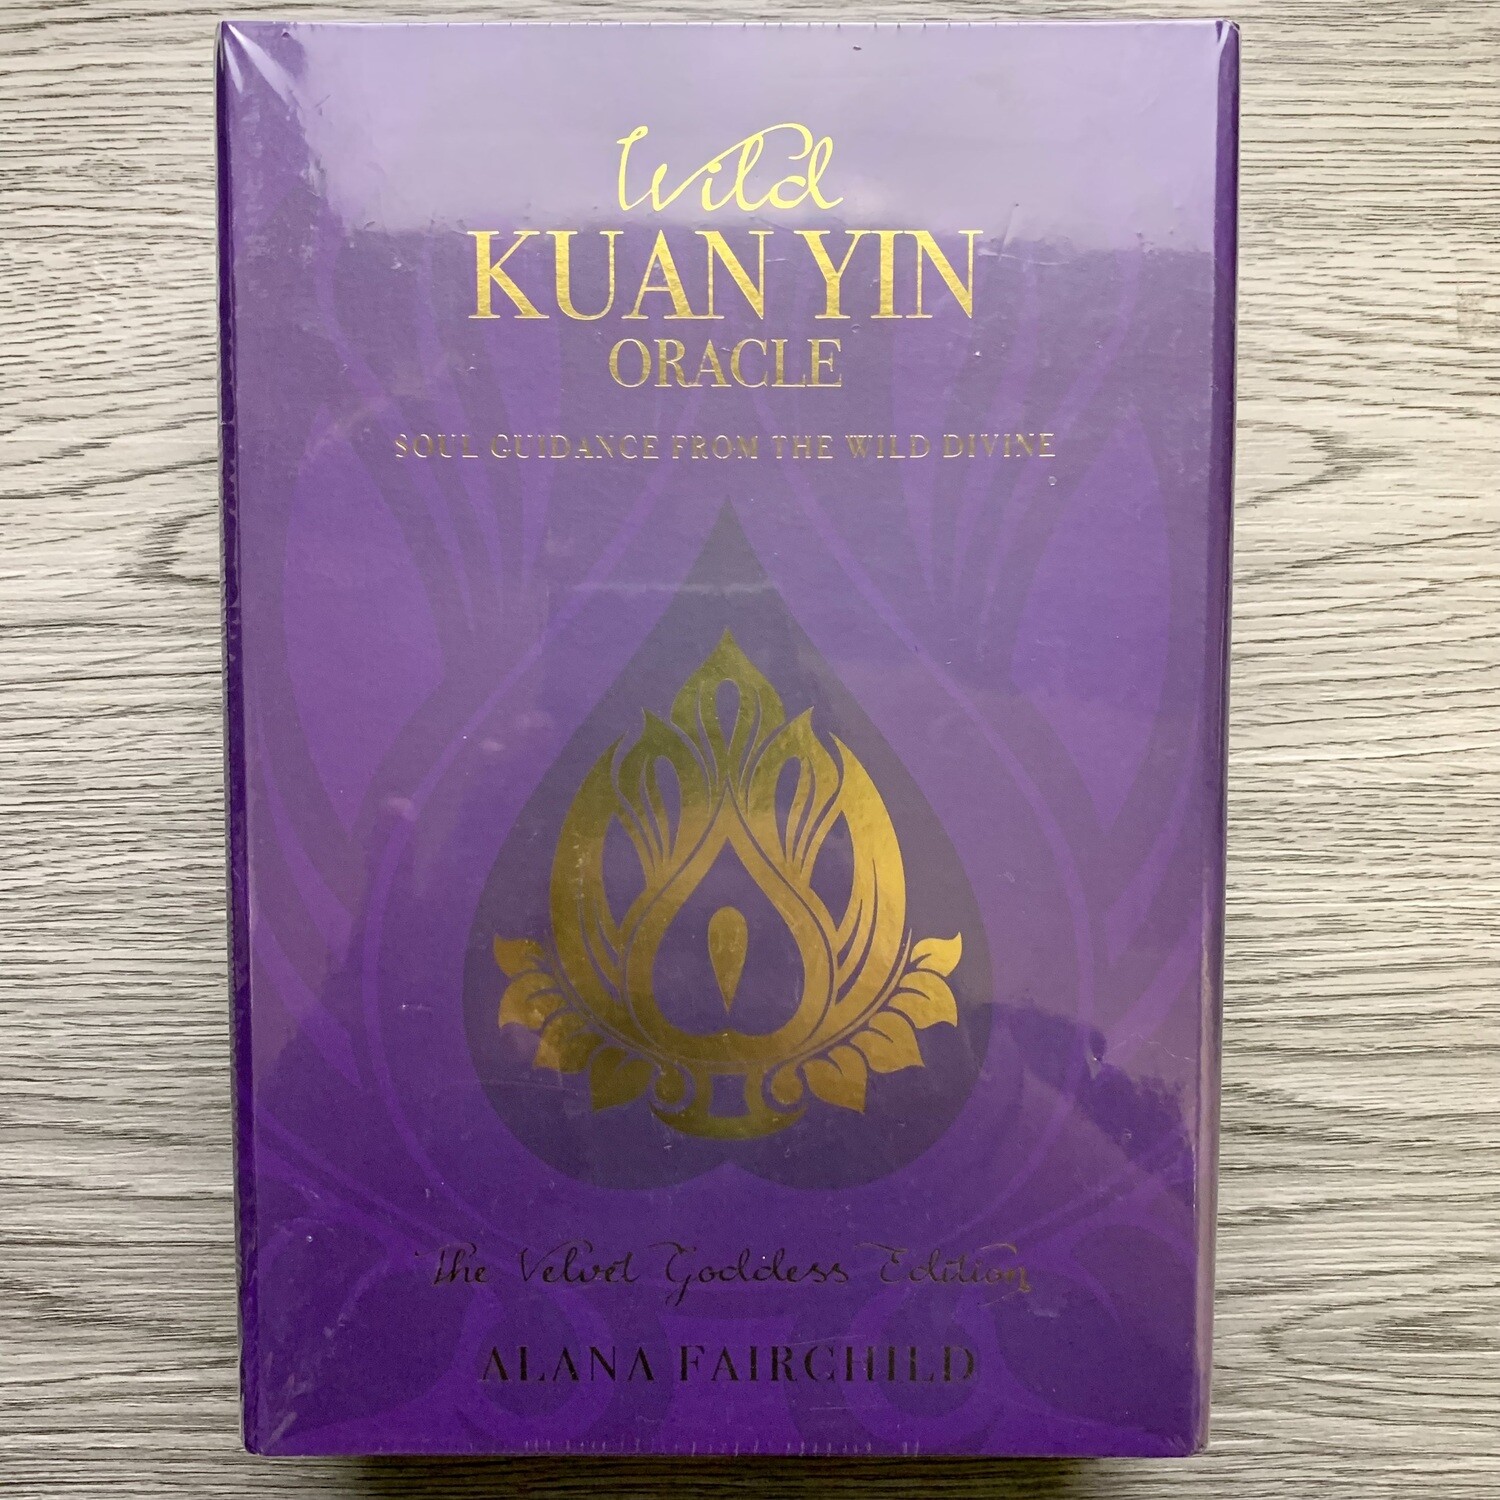 Wild Kuan Yin Oracle: The Velvet Goddess Edition